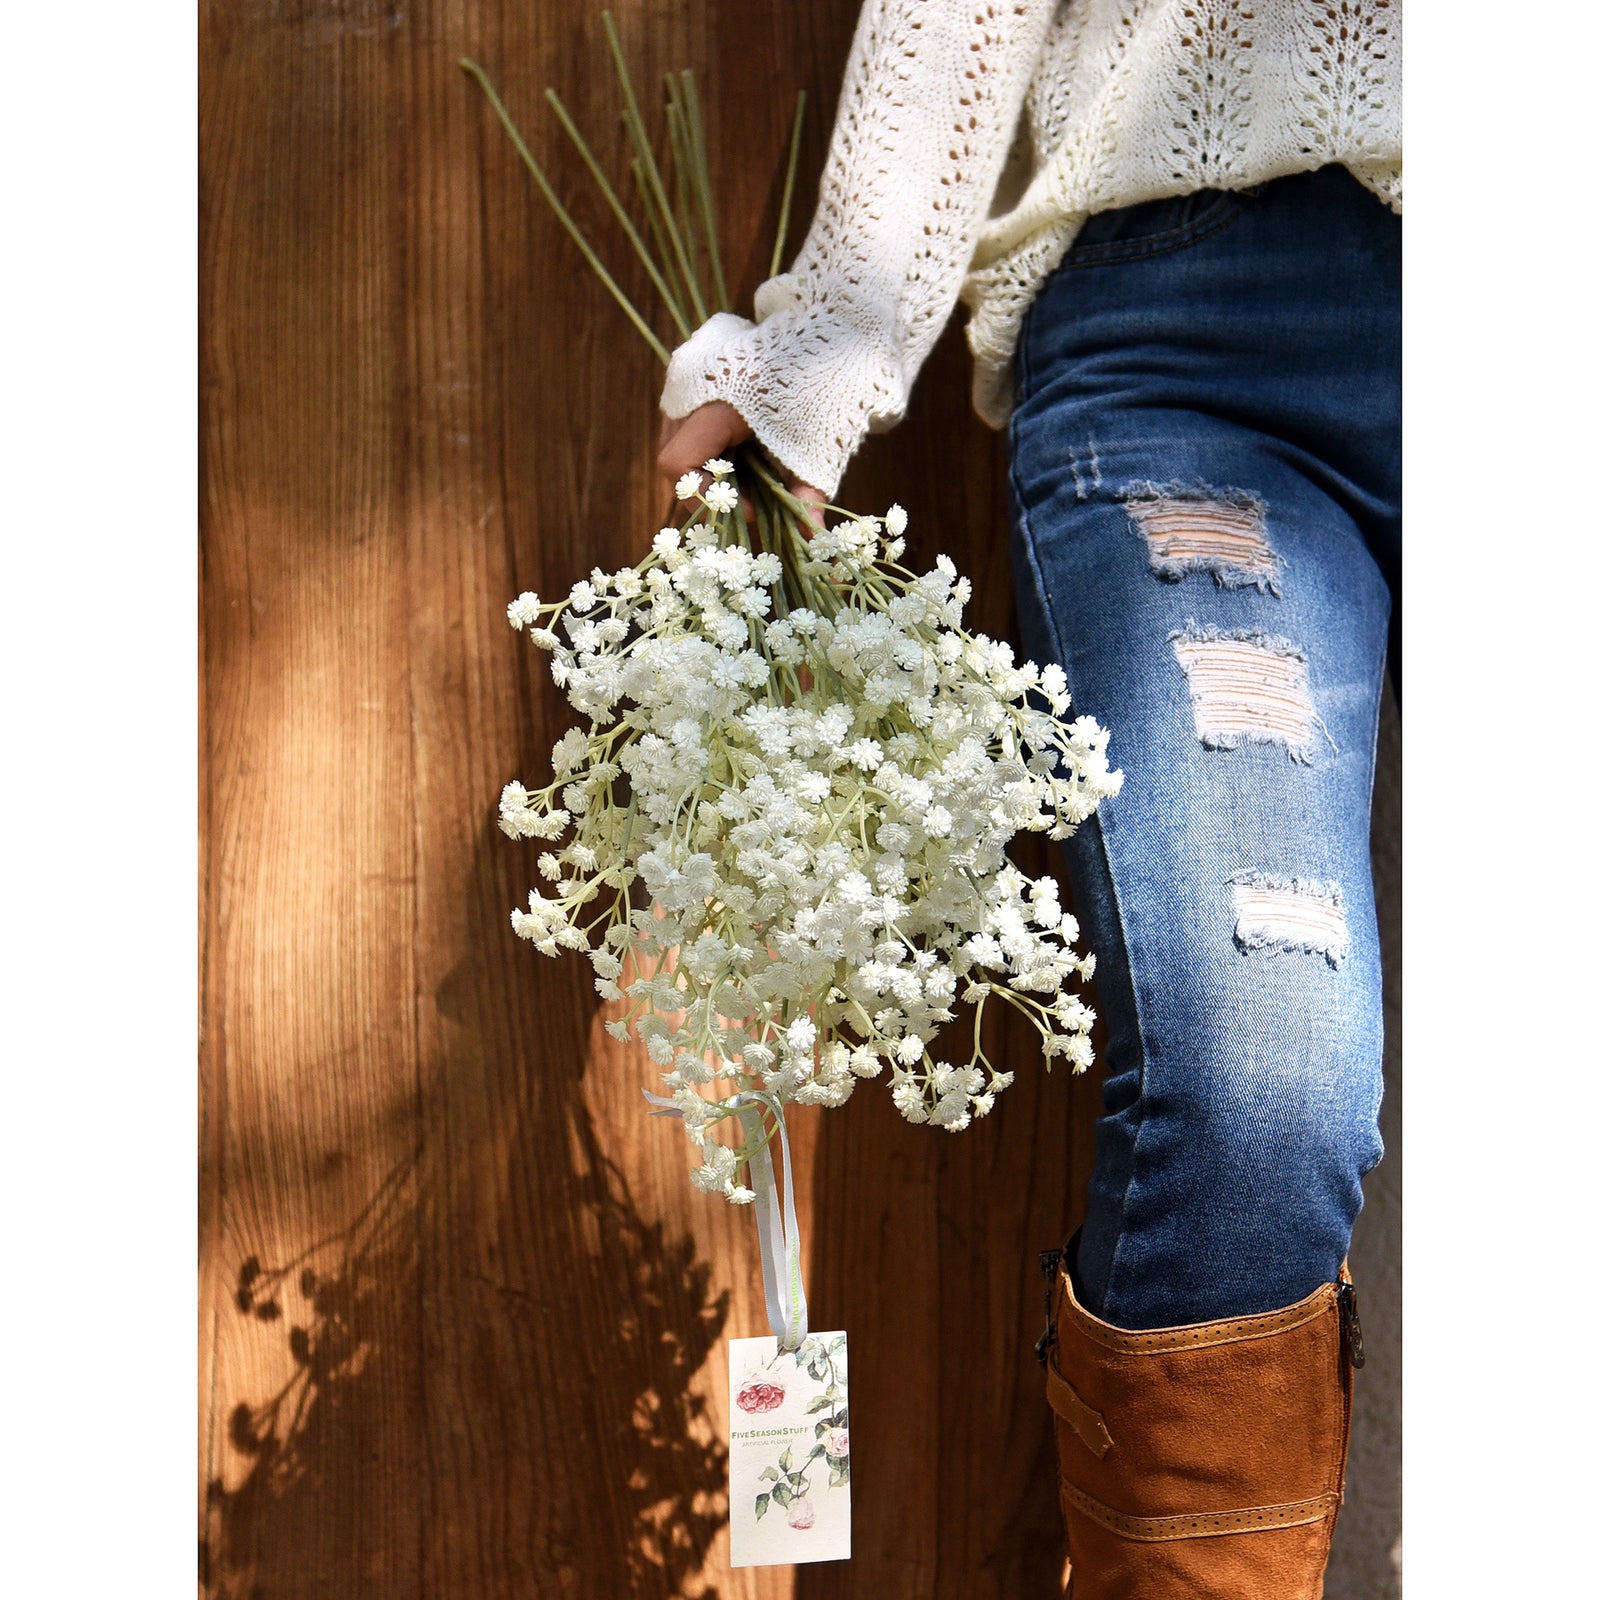 FiveSeasonStuff Baby's Breath Artificial Flowers 10 Baby's Breath Gypsophila 2 ft Tall Long Stems for Floral Arrangement, Wedding Flower Bouquet Décor (Vintage White)